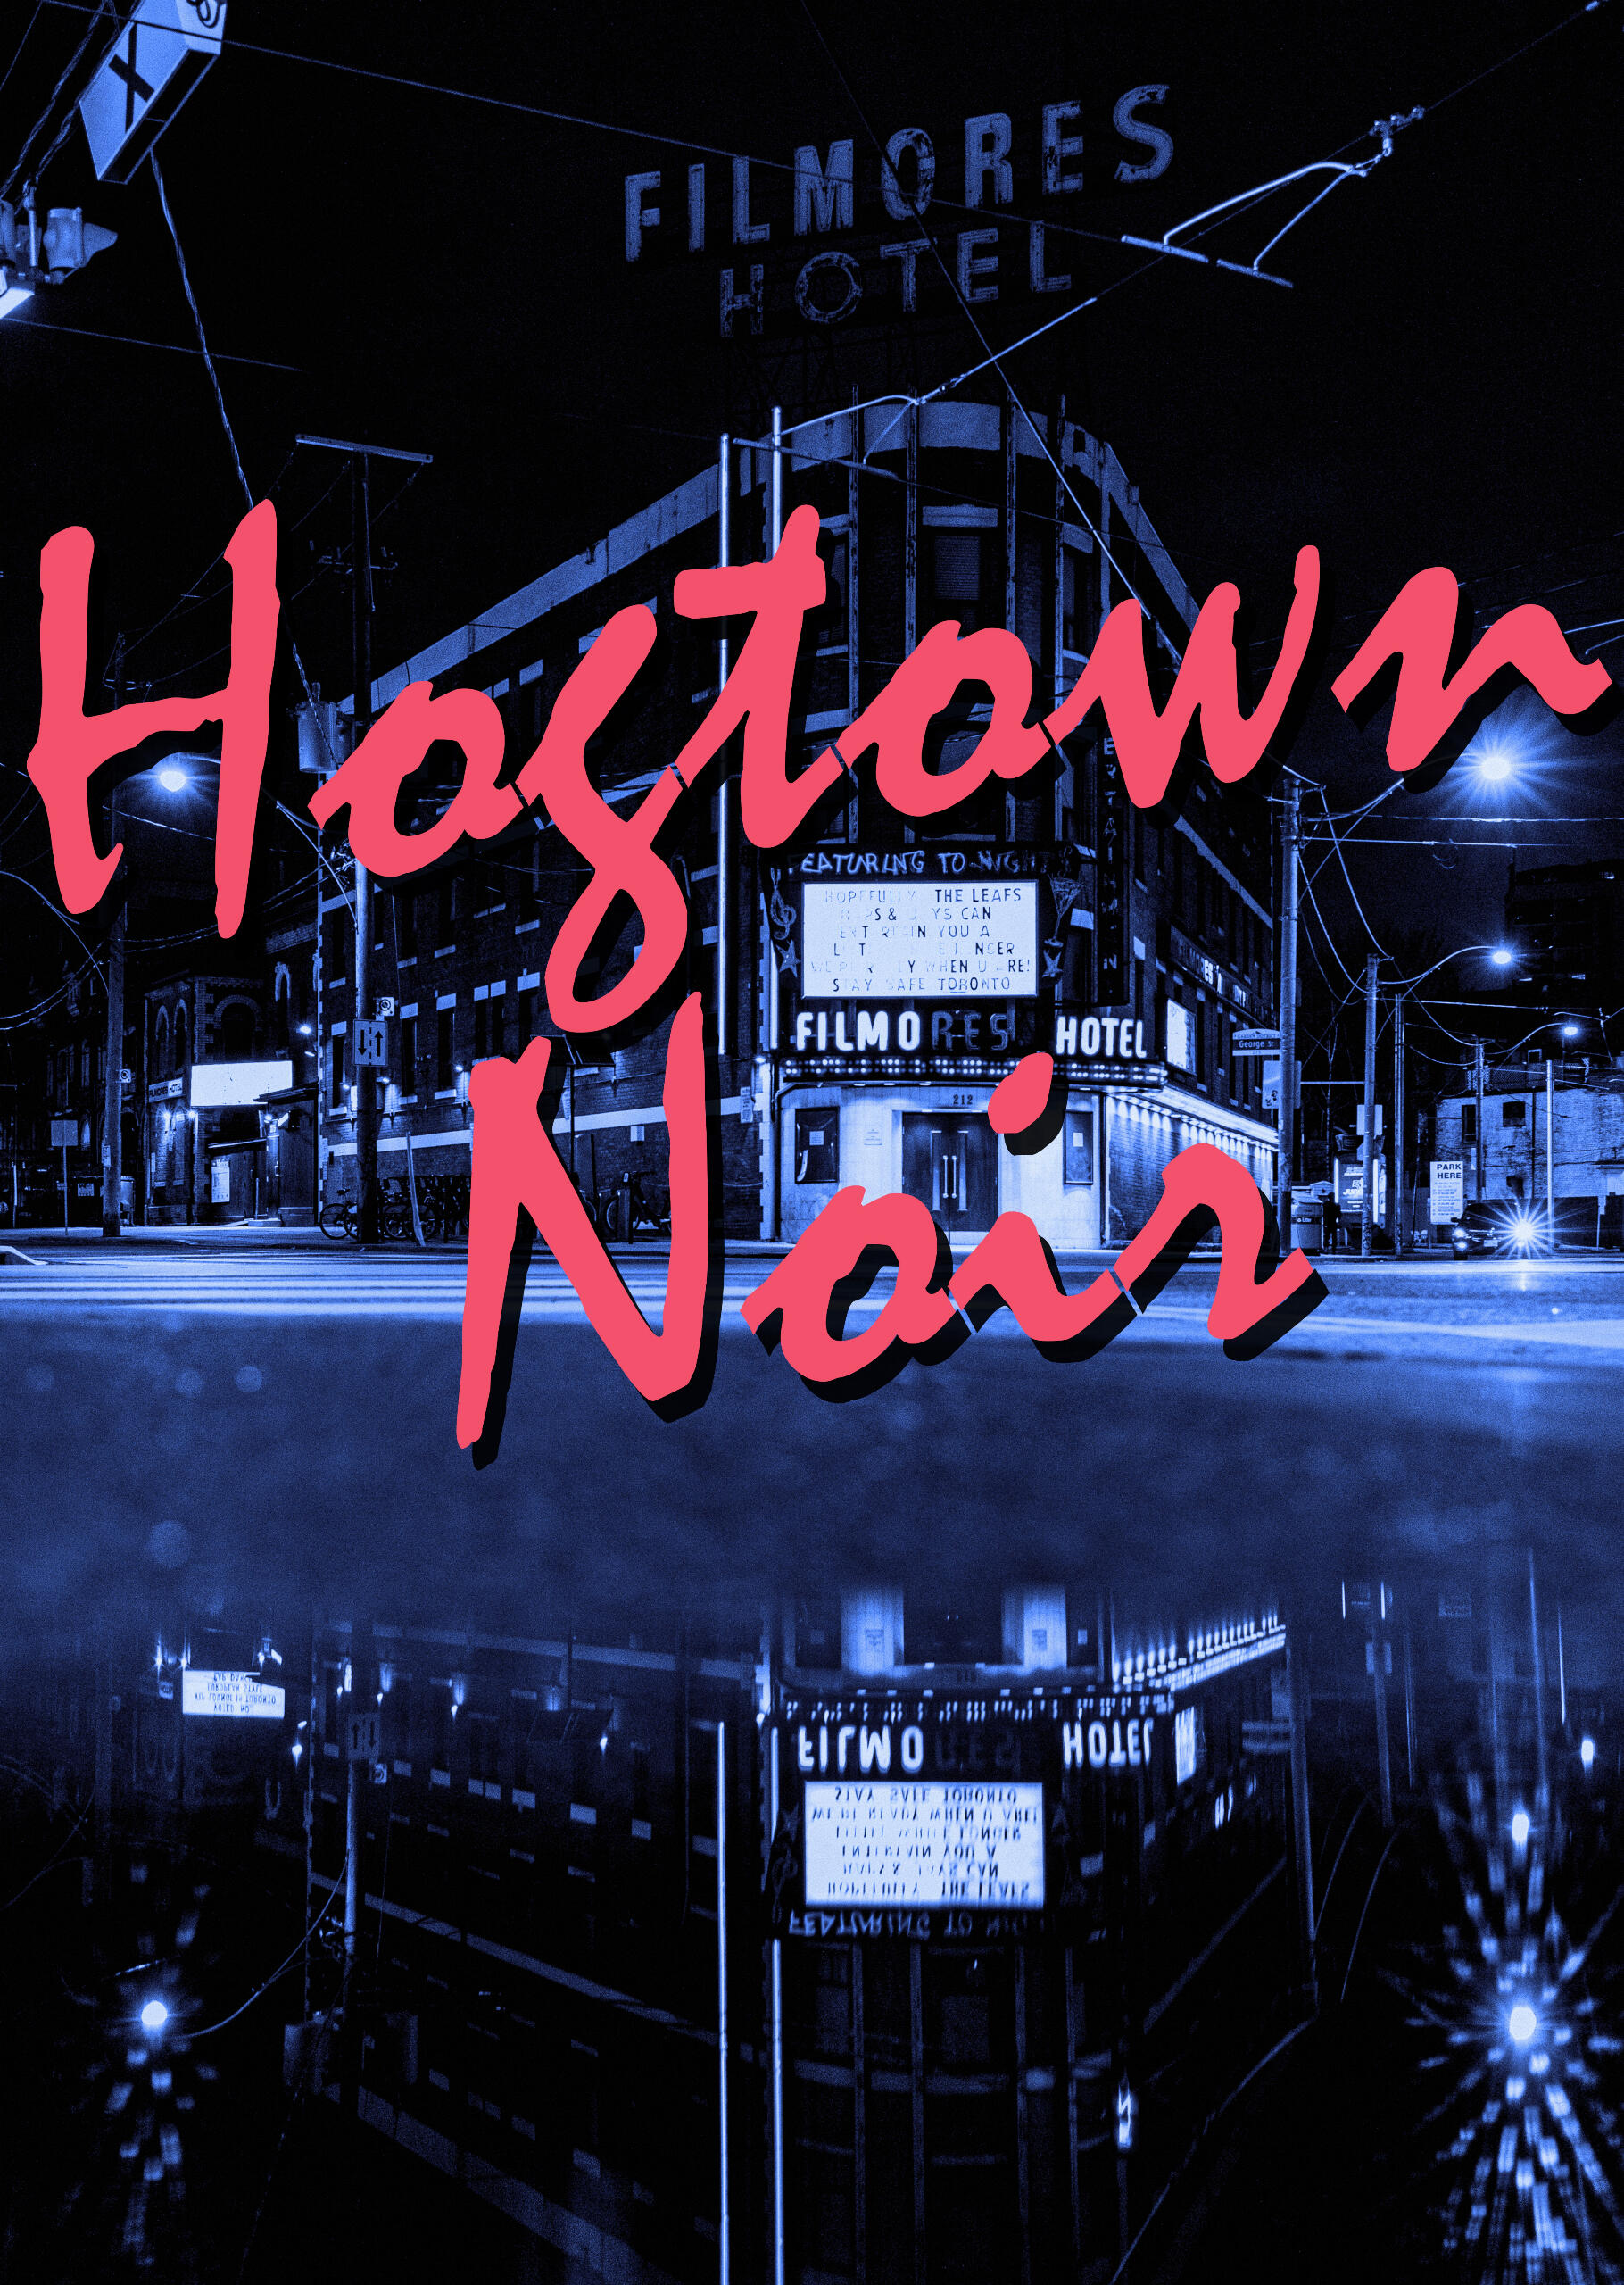 hogtown noir night scene with font